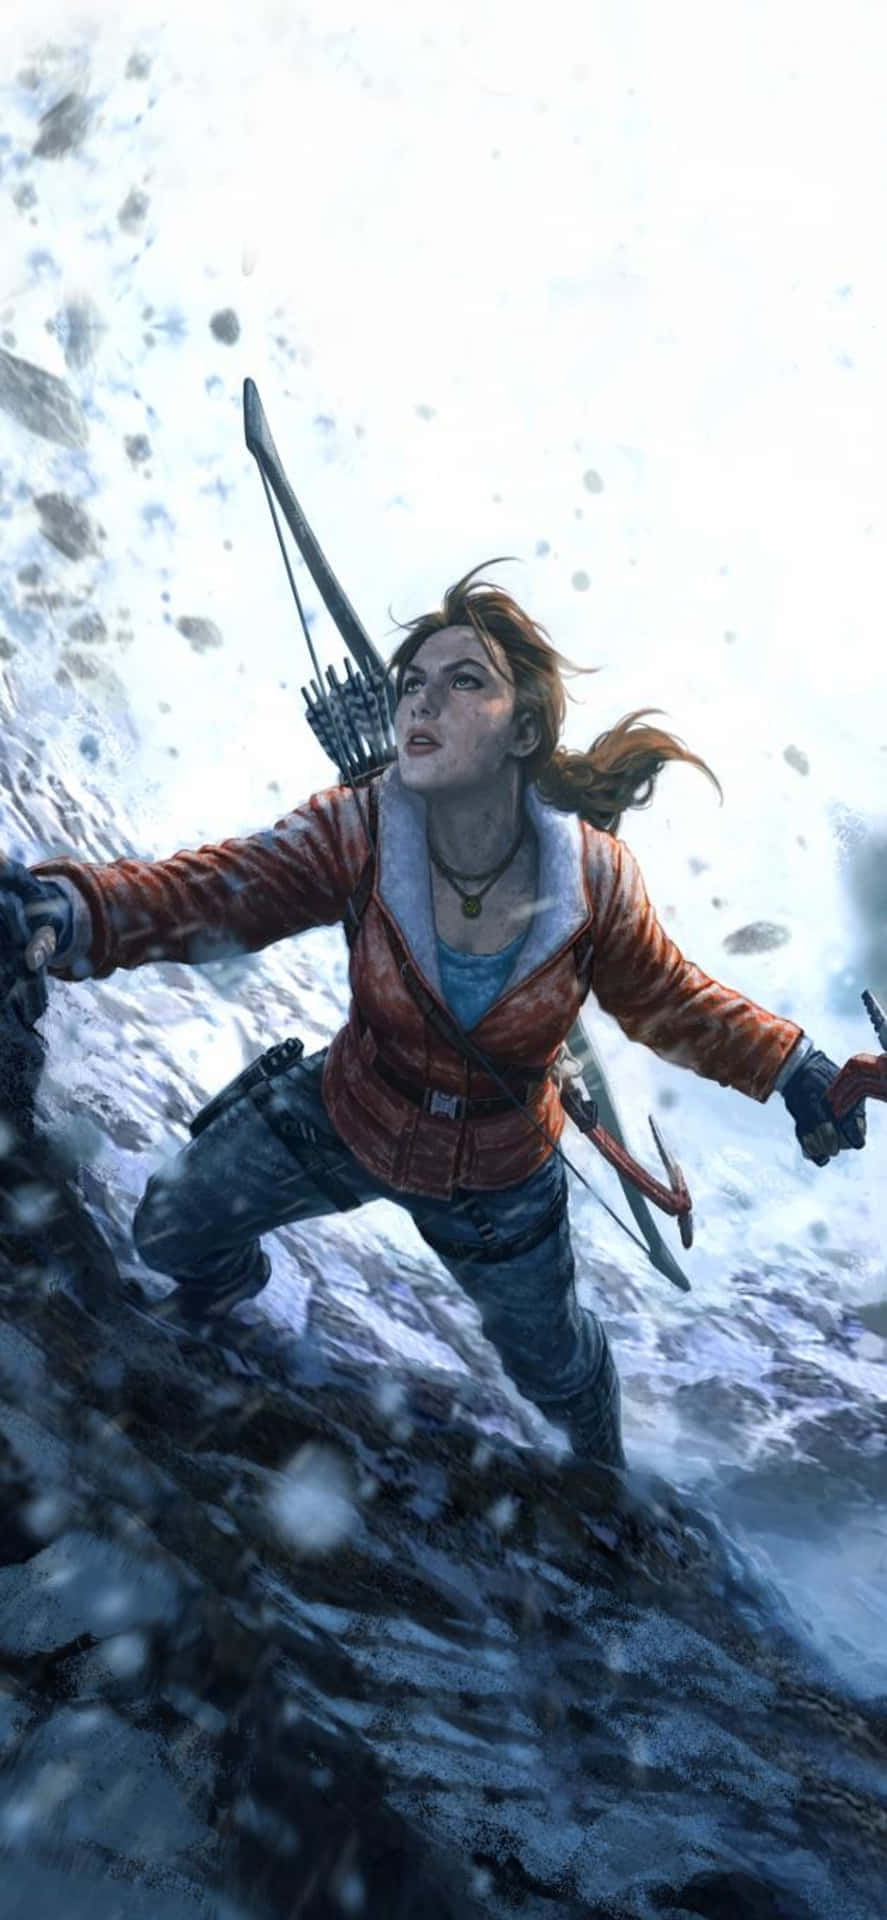 Rise up and encounter Lara Croft's powerful adventure.